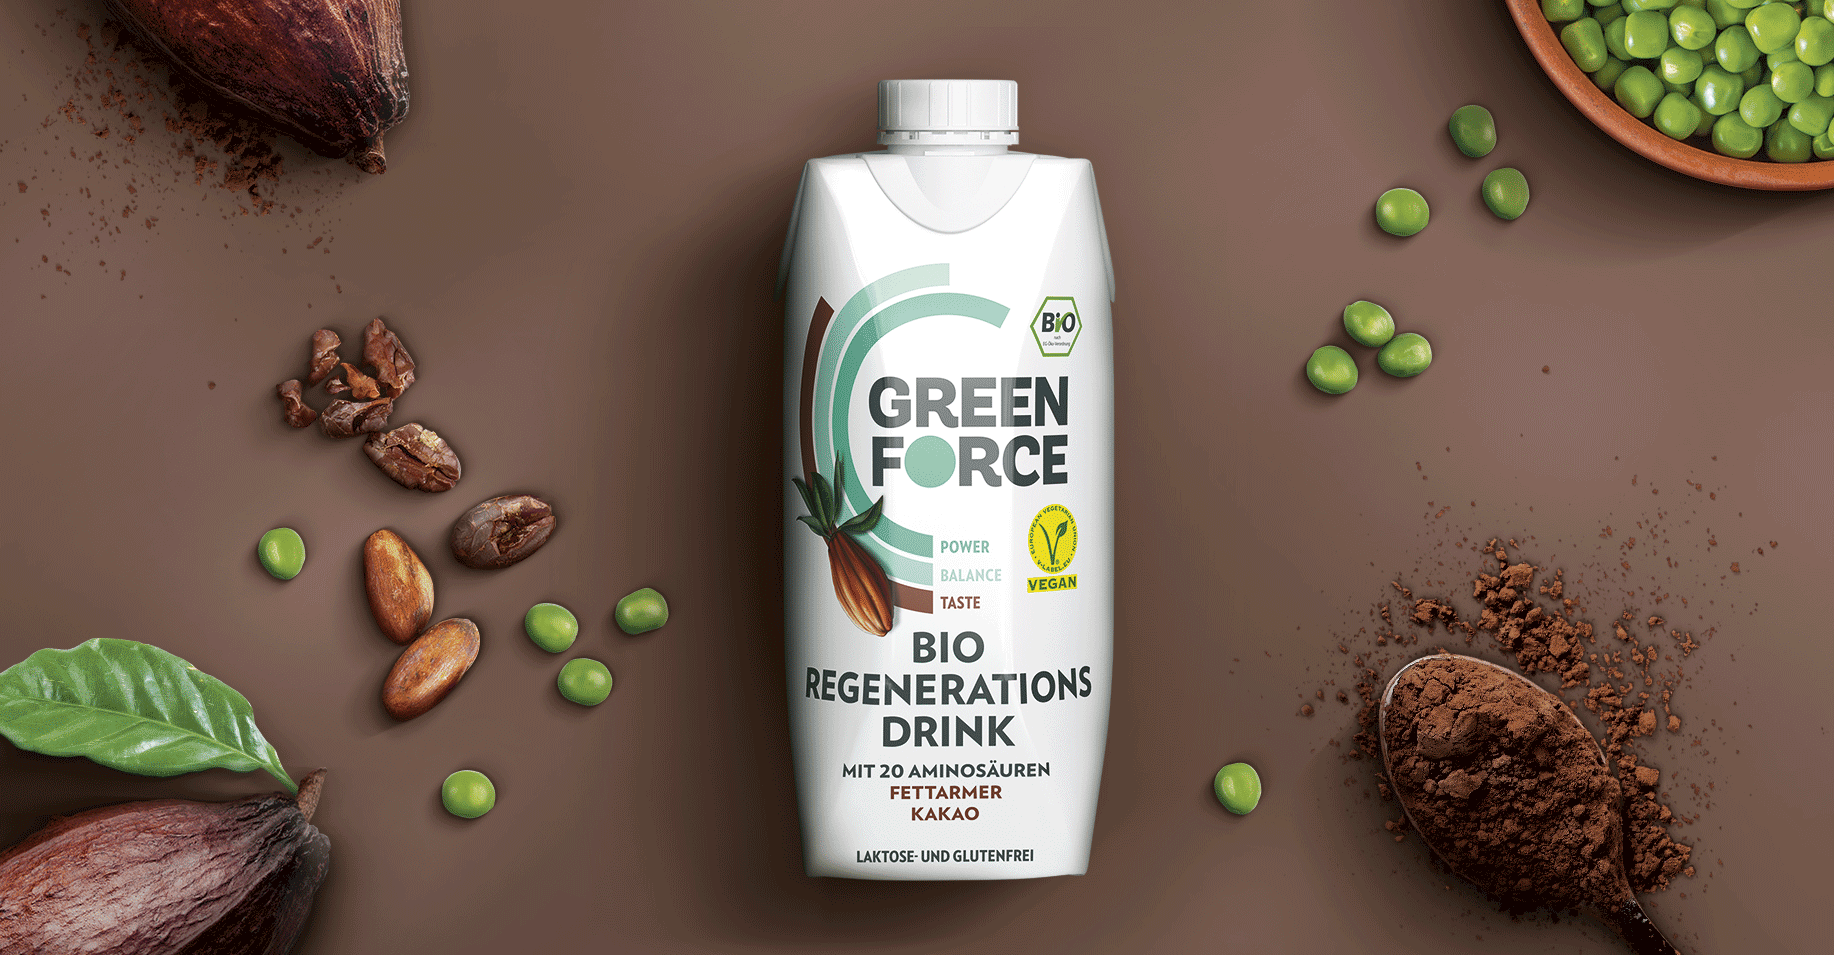 Greenforce Bio Regeneration Drinks Relaunch Grafikdesign Branding-Strategie Verpackungsdesign Logodesign Line Extension POS Material Corporate Design